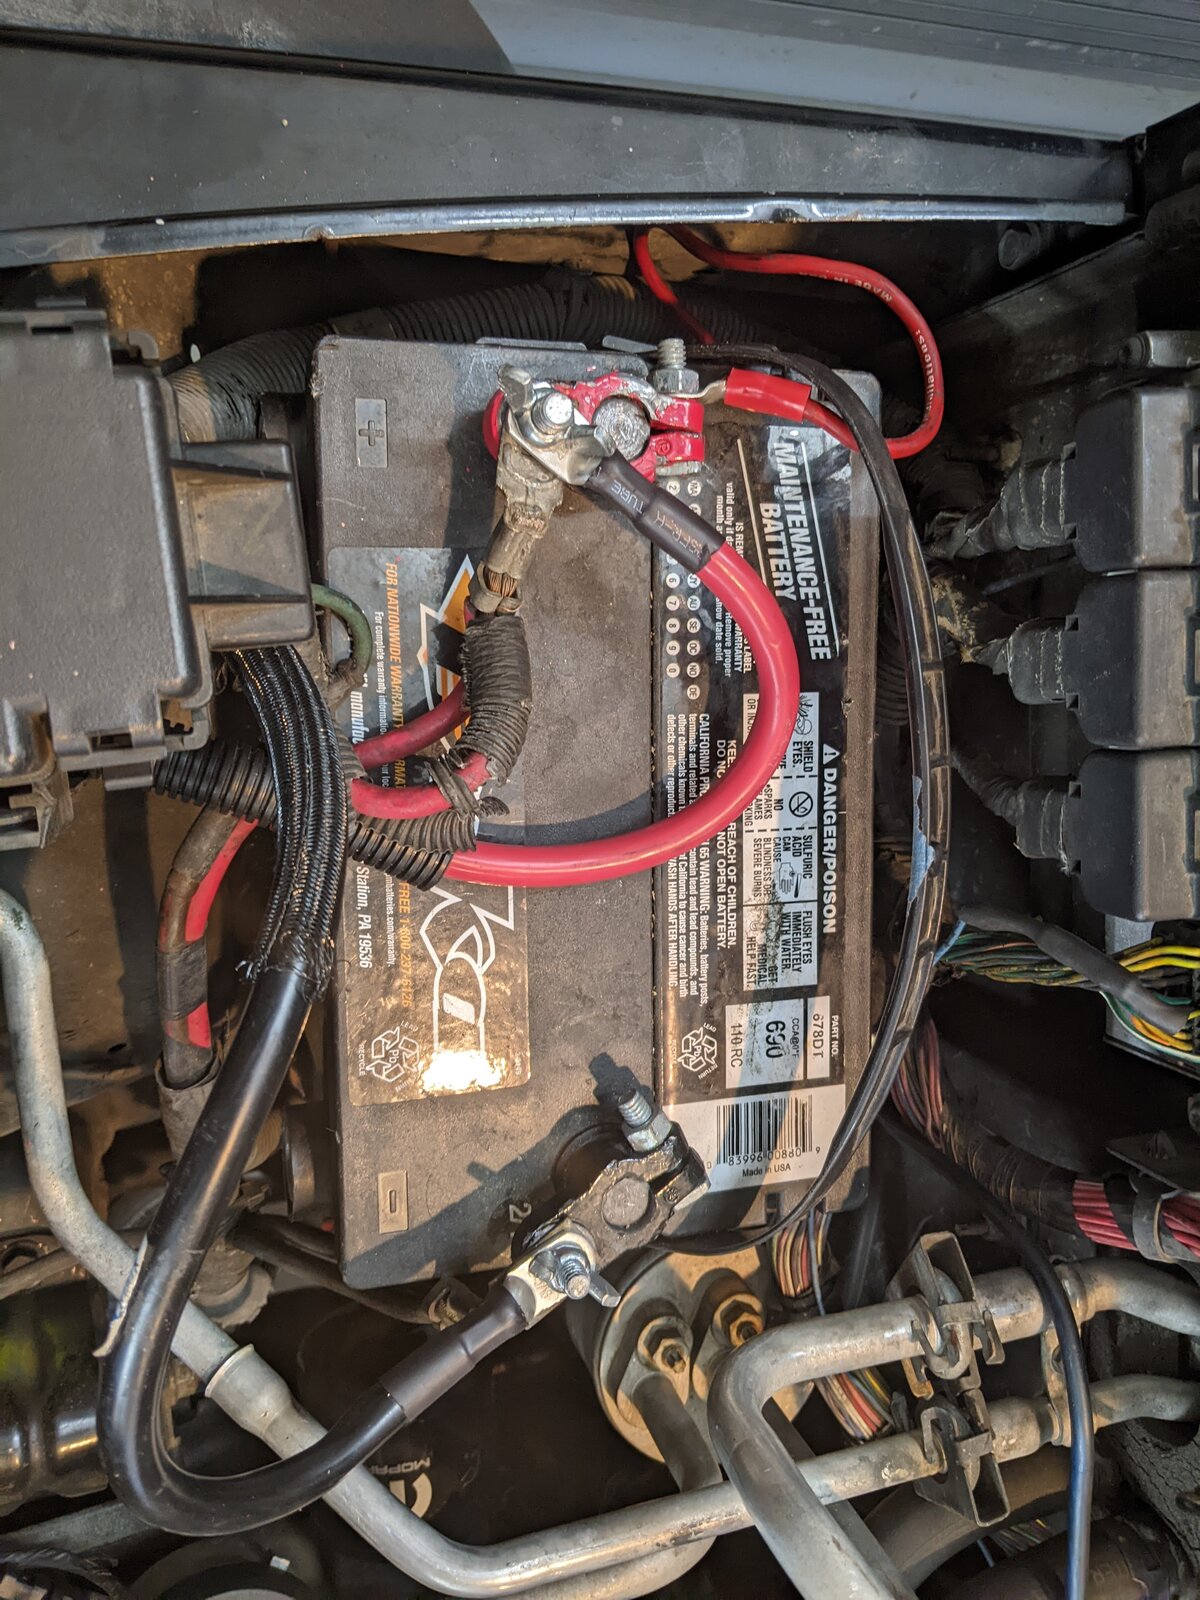 P0516 code and voltage gauge not working | Jeep Wrangler TJ Forum